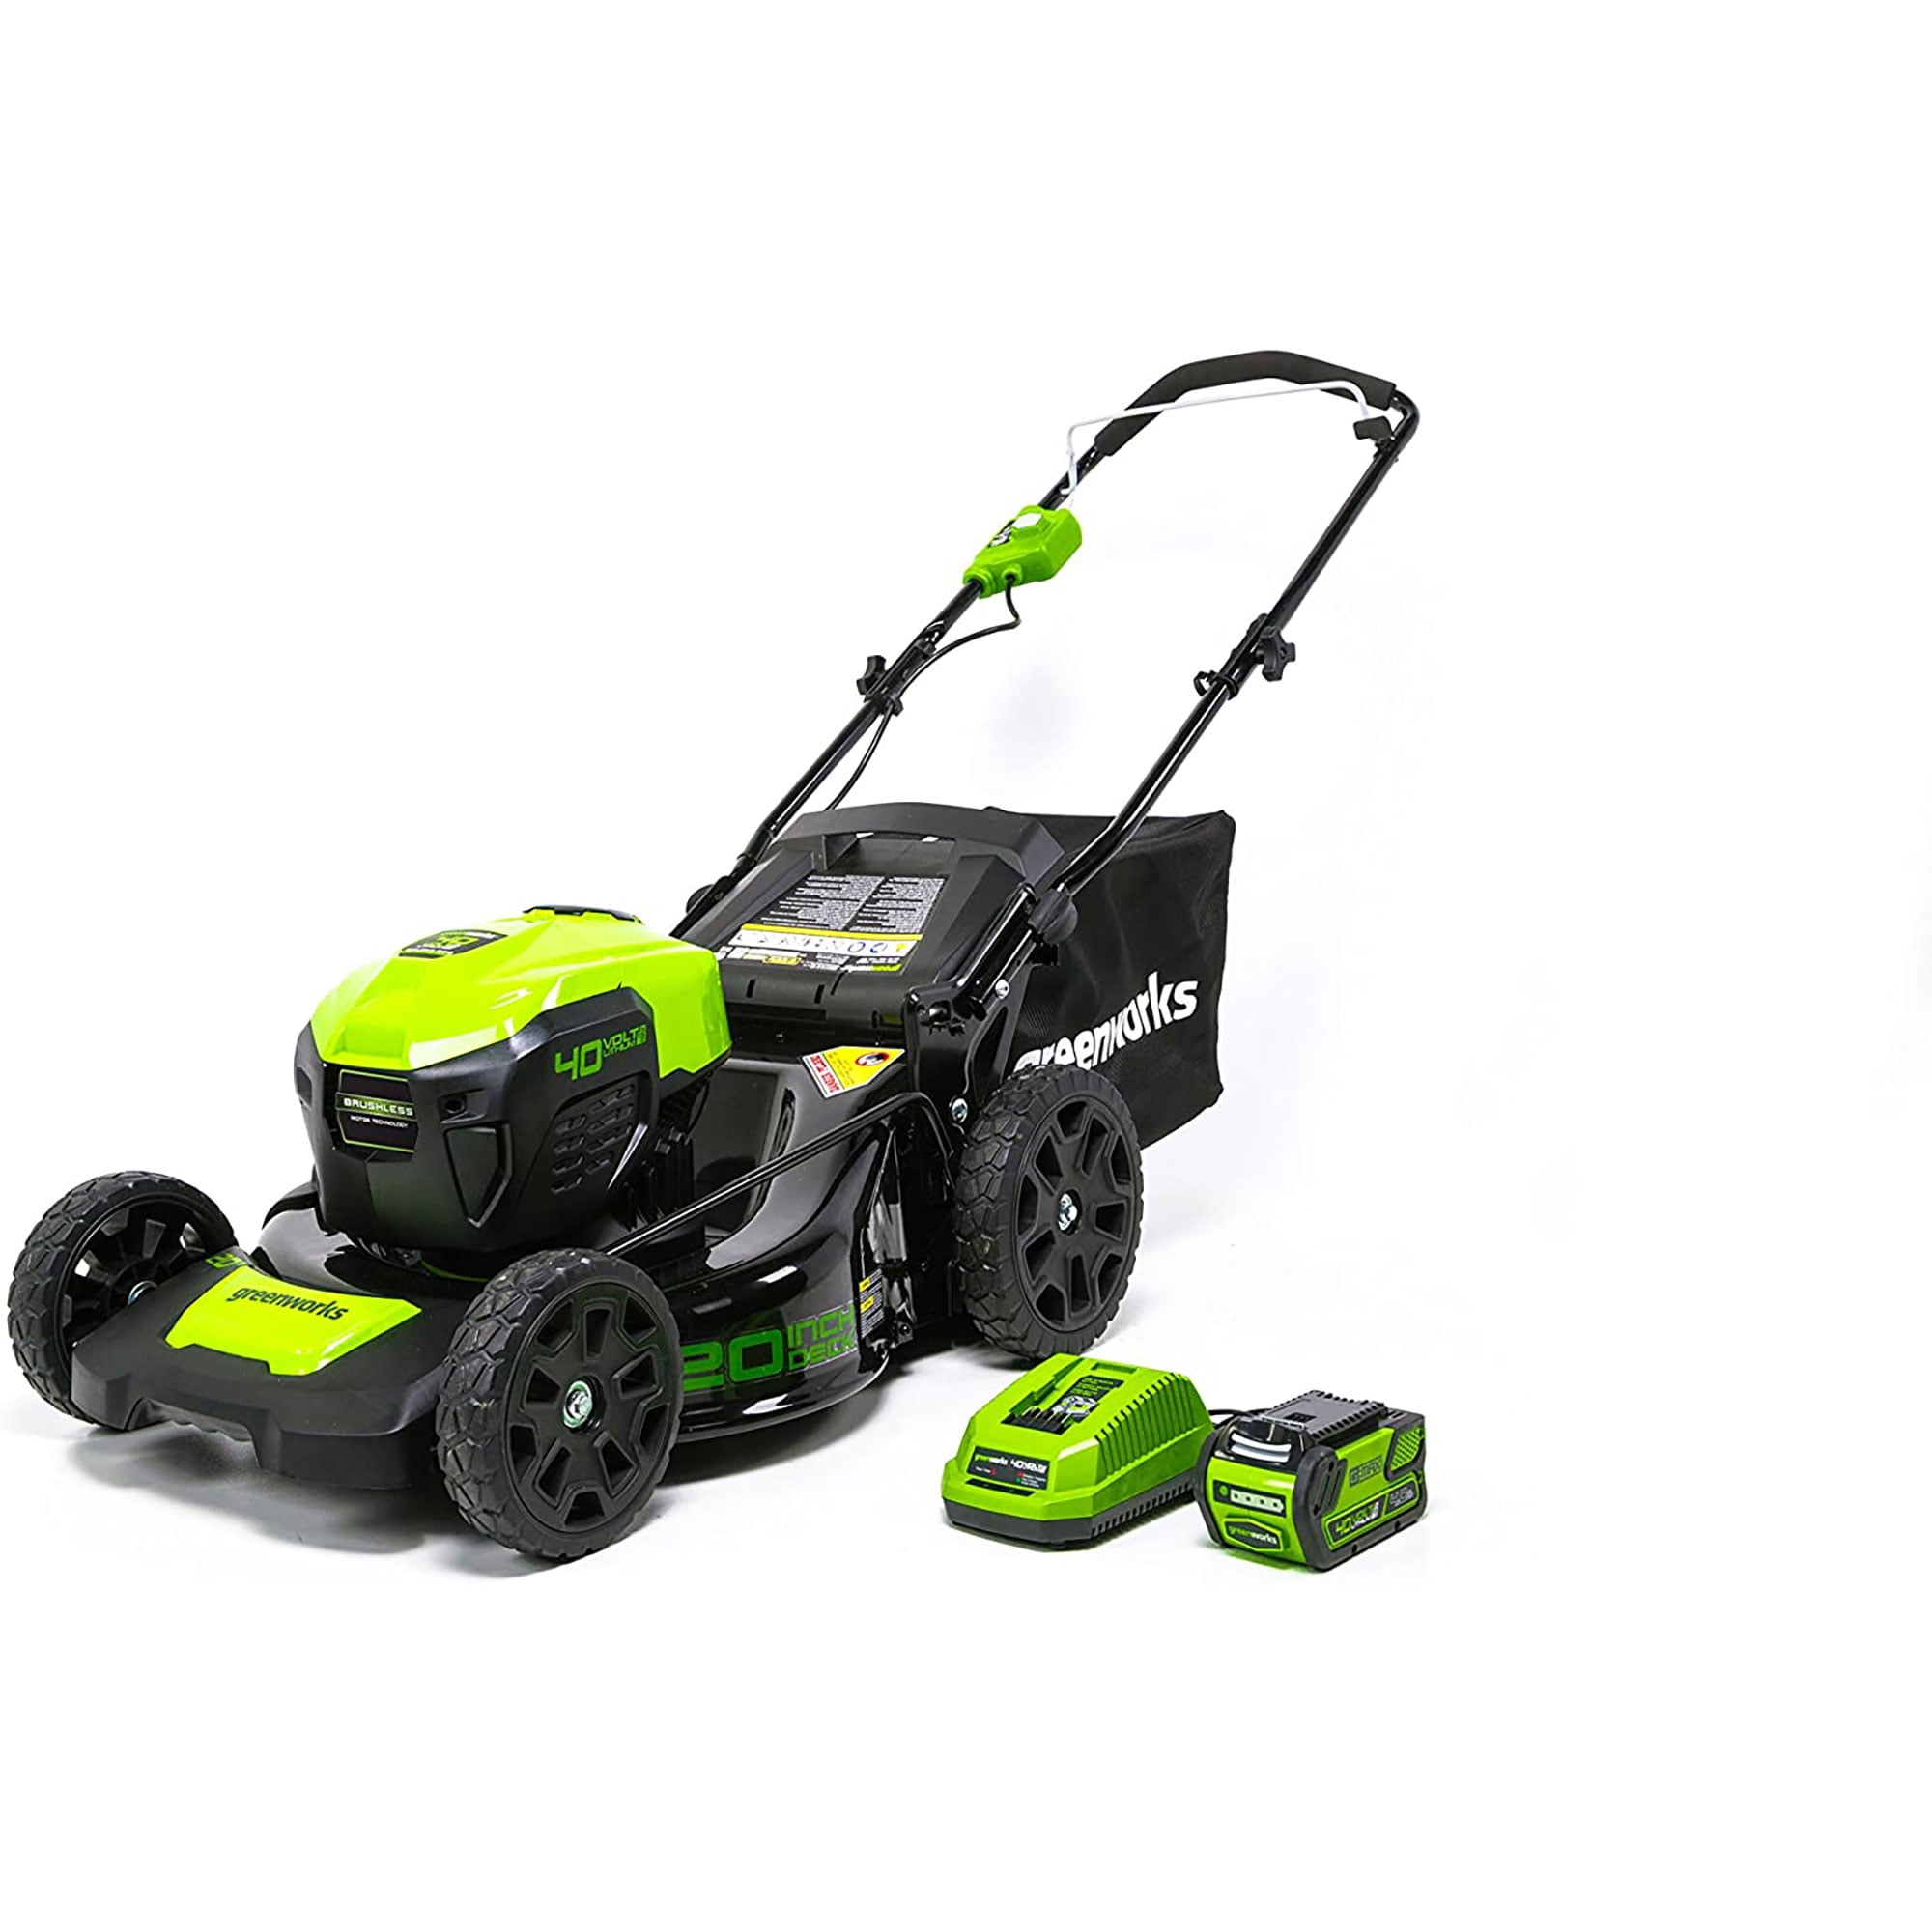 Toy Garden Mower Set lawnmower tools outdoor child preschool gardening boy g 